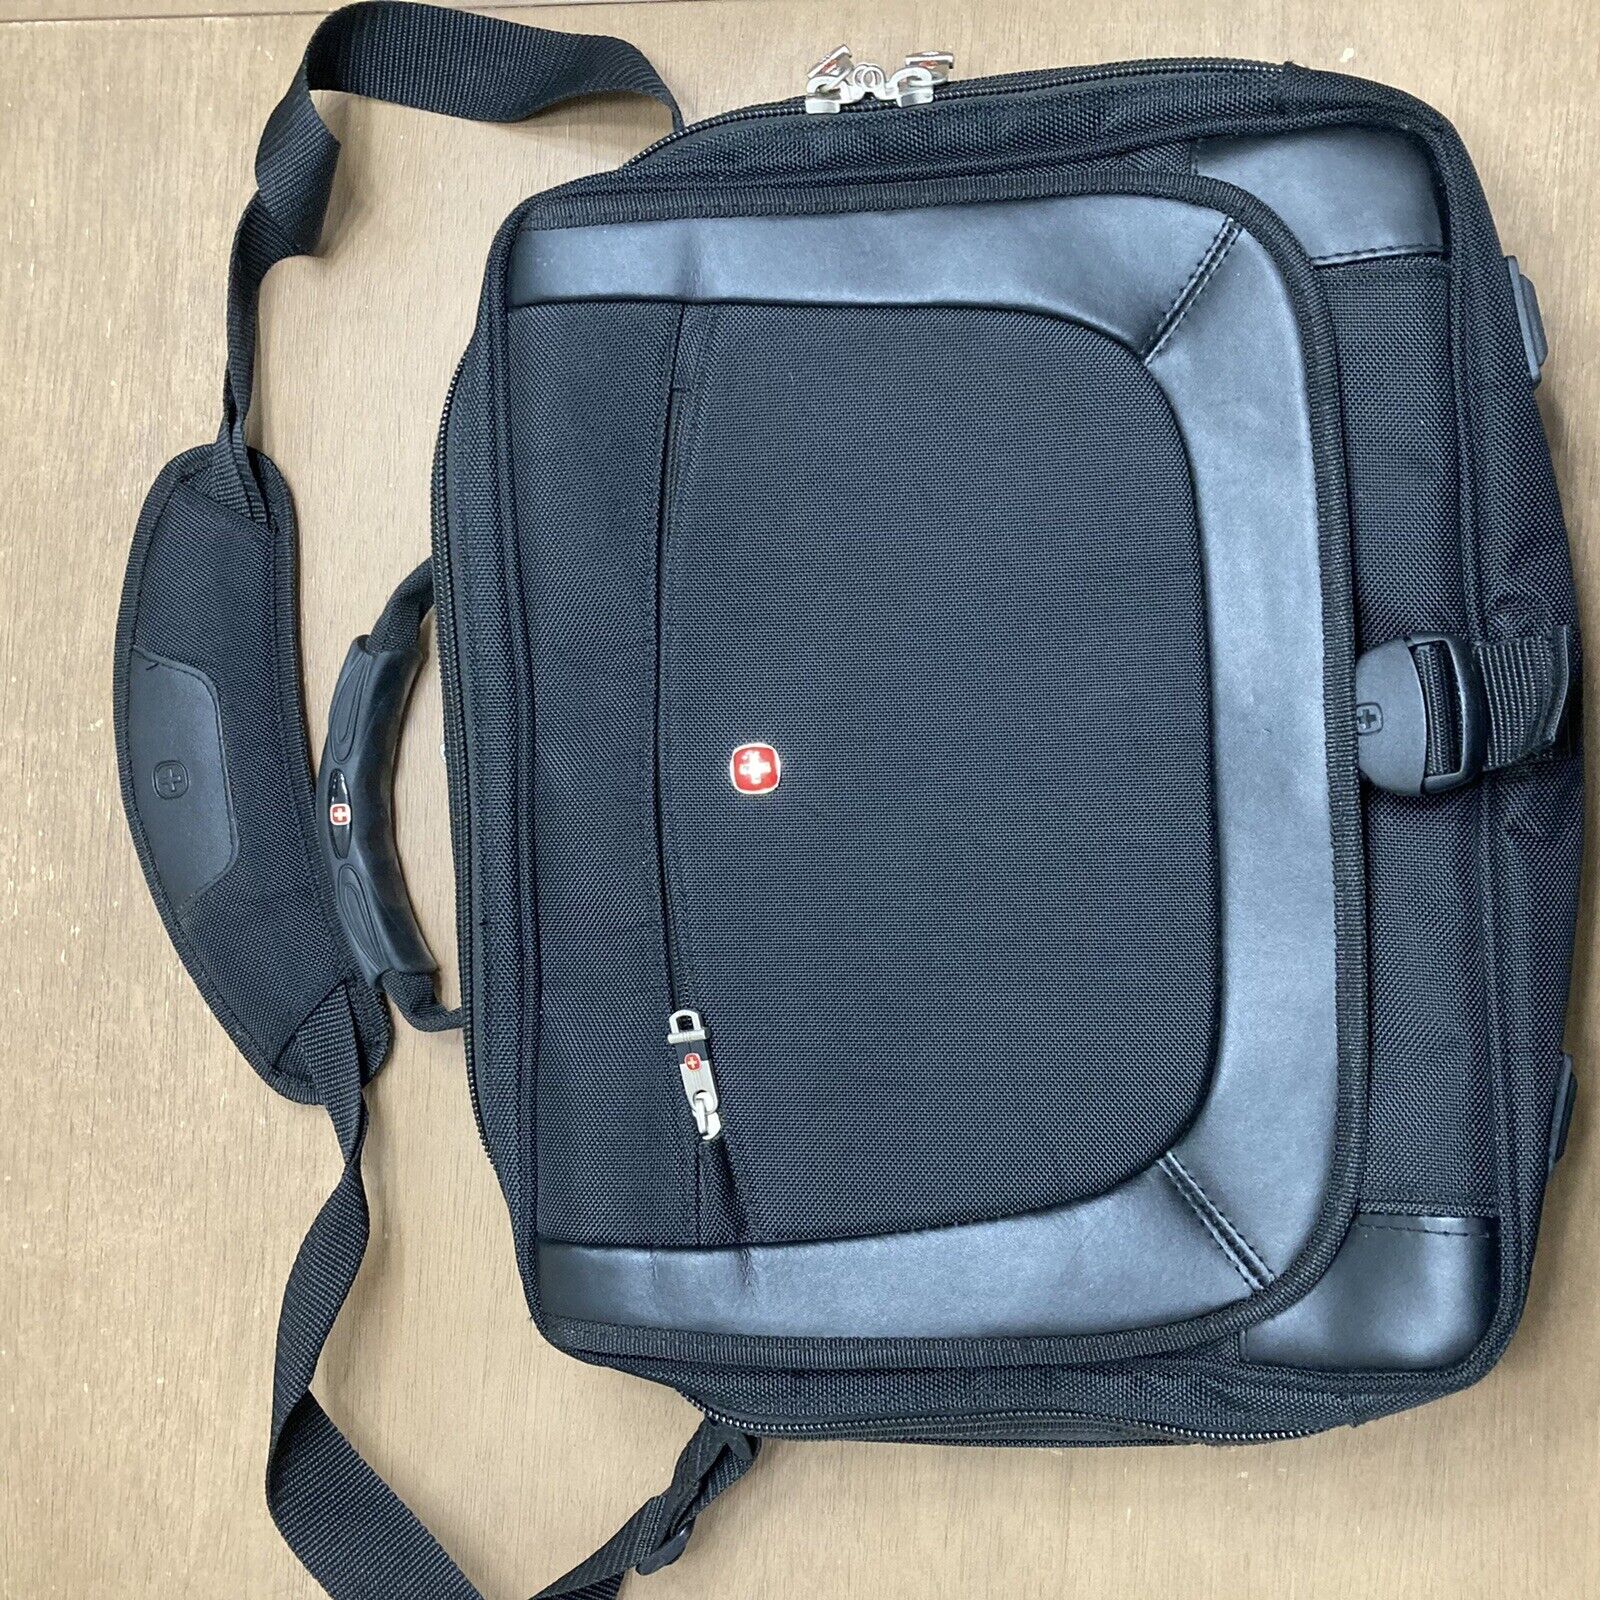 Swiss Tech Wegner Laptop Case Messenger Bag Black Mutli Compartment